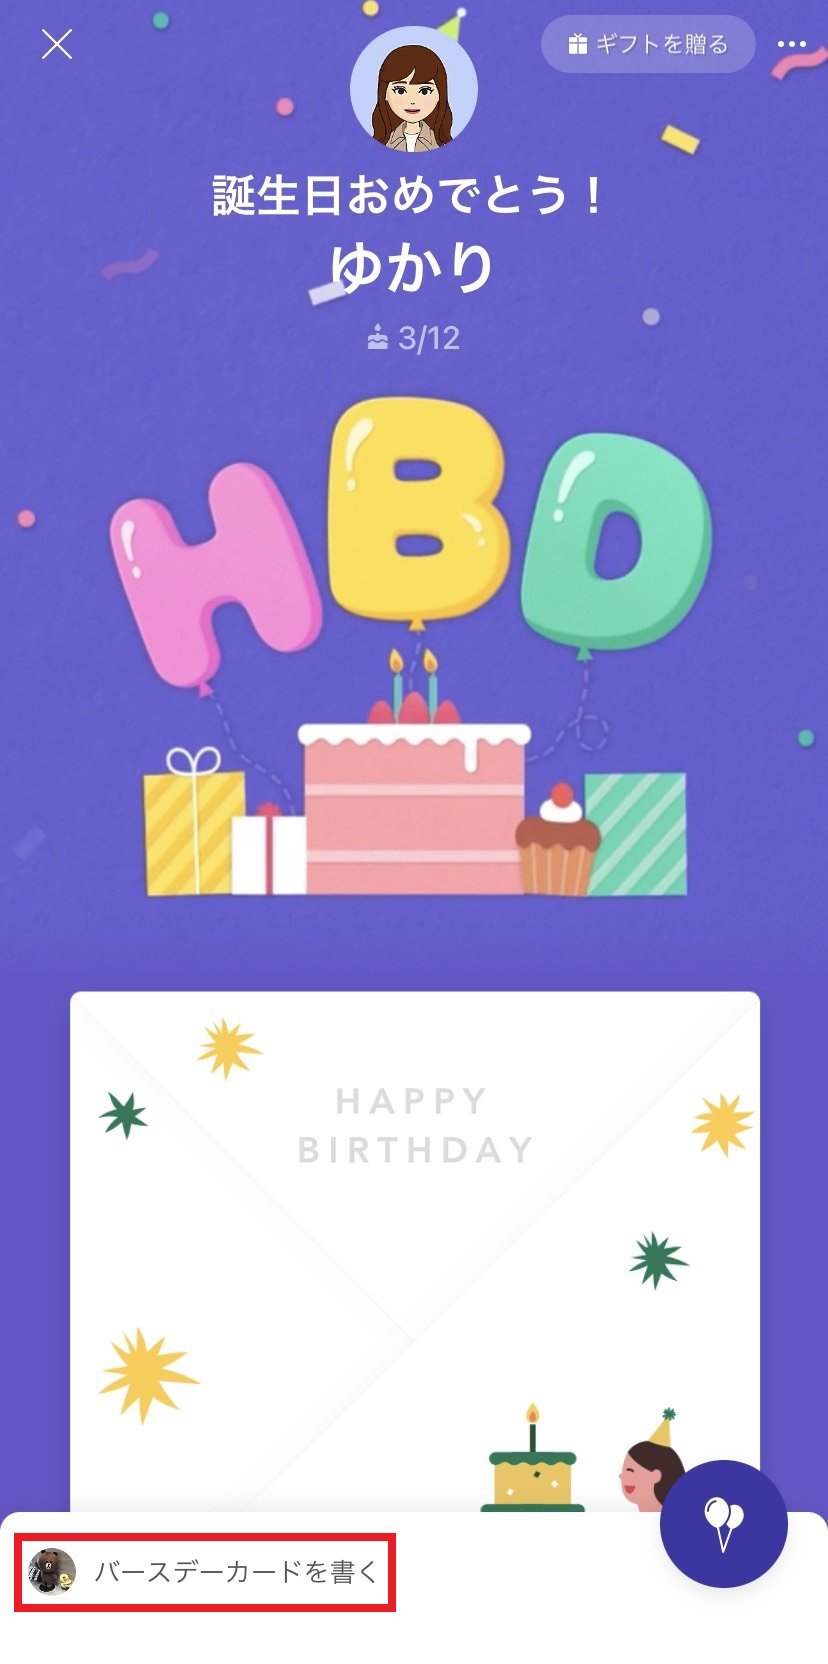 LINE ケーキとメッセージ欄がある誕生日カード